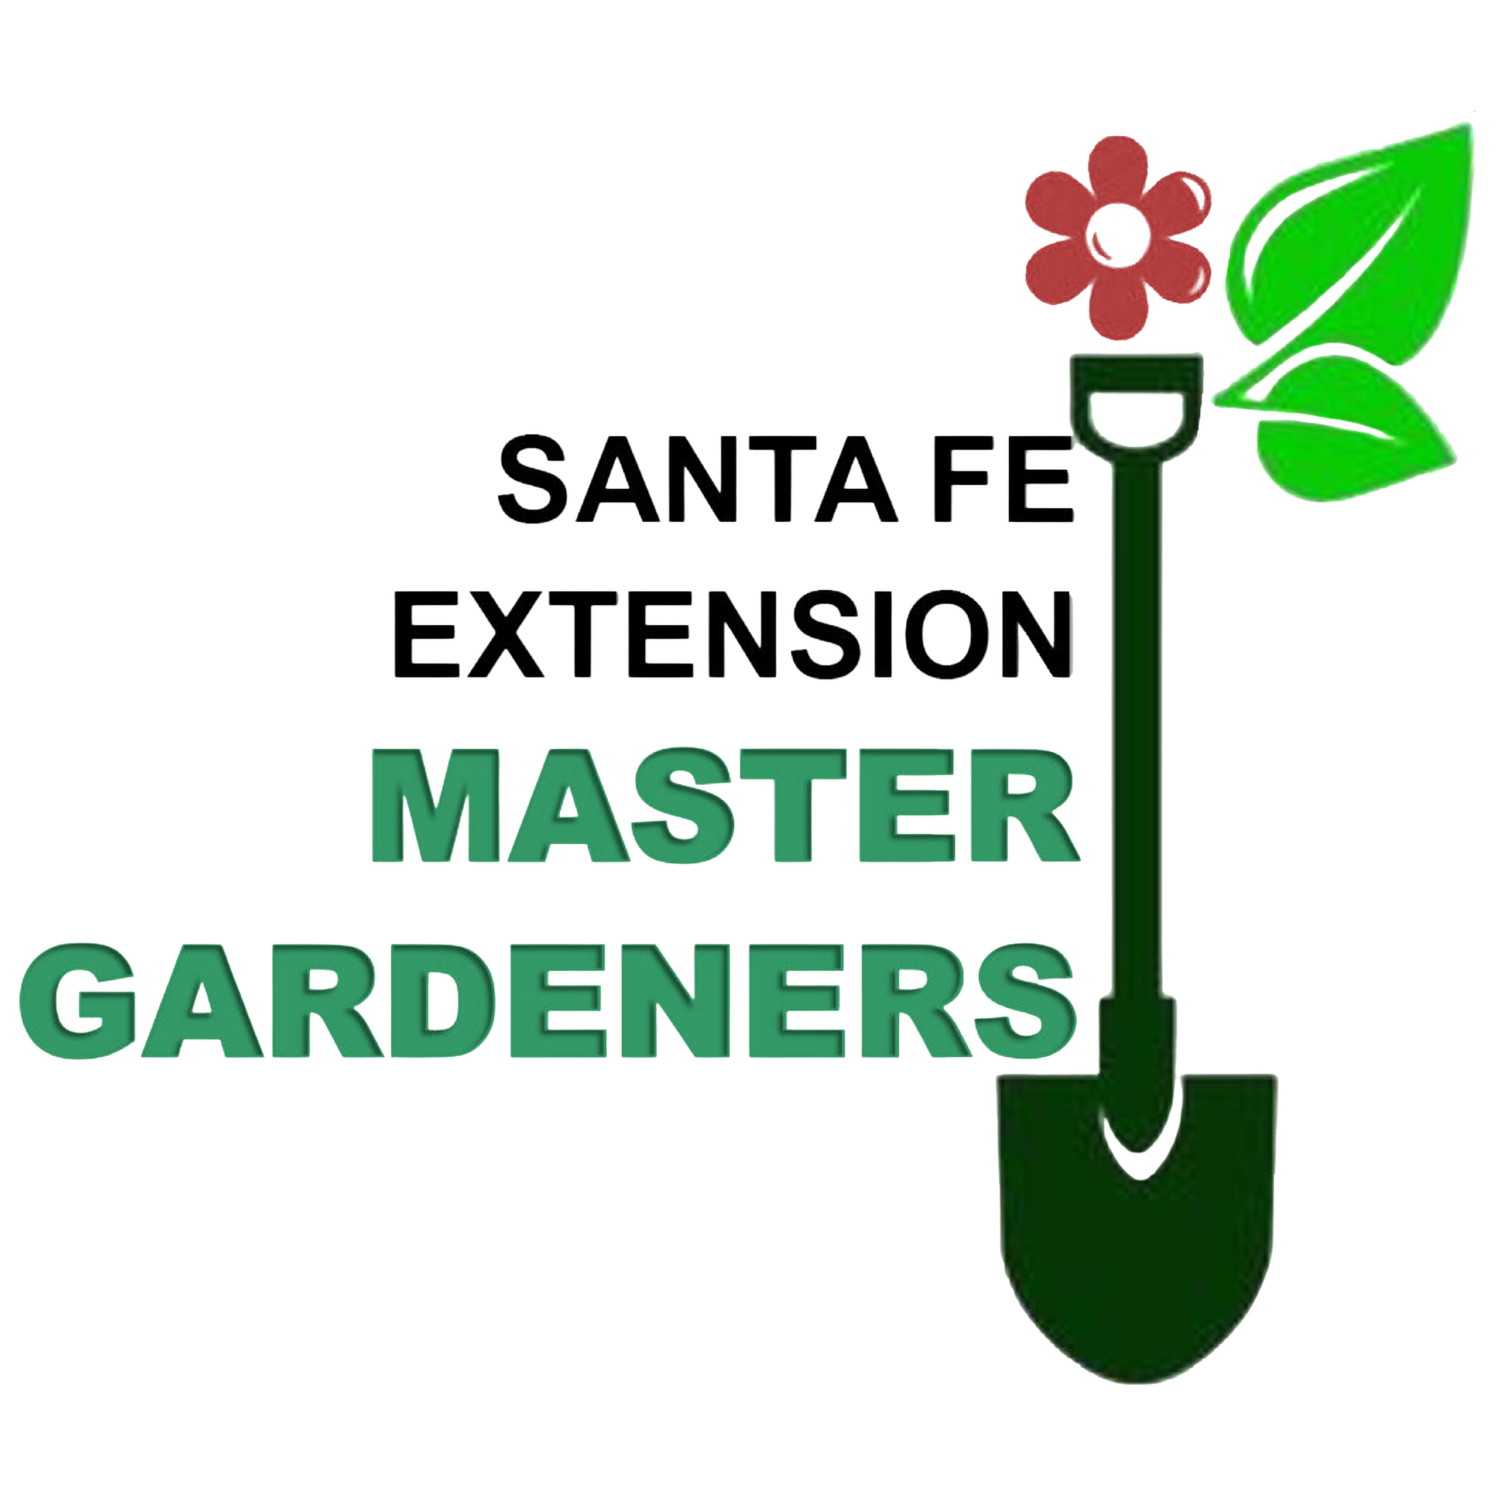 Santa Fe Extension Master Gardeners